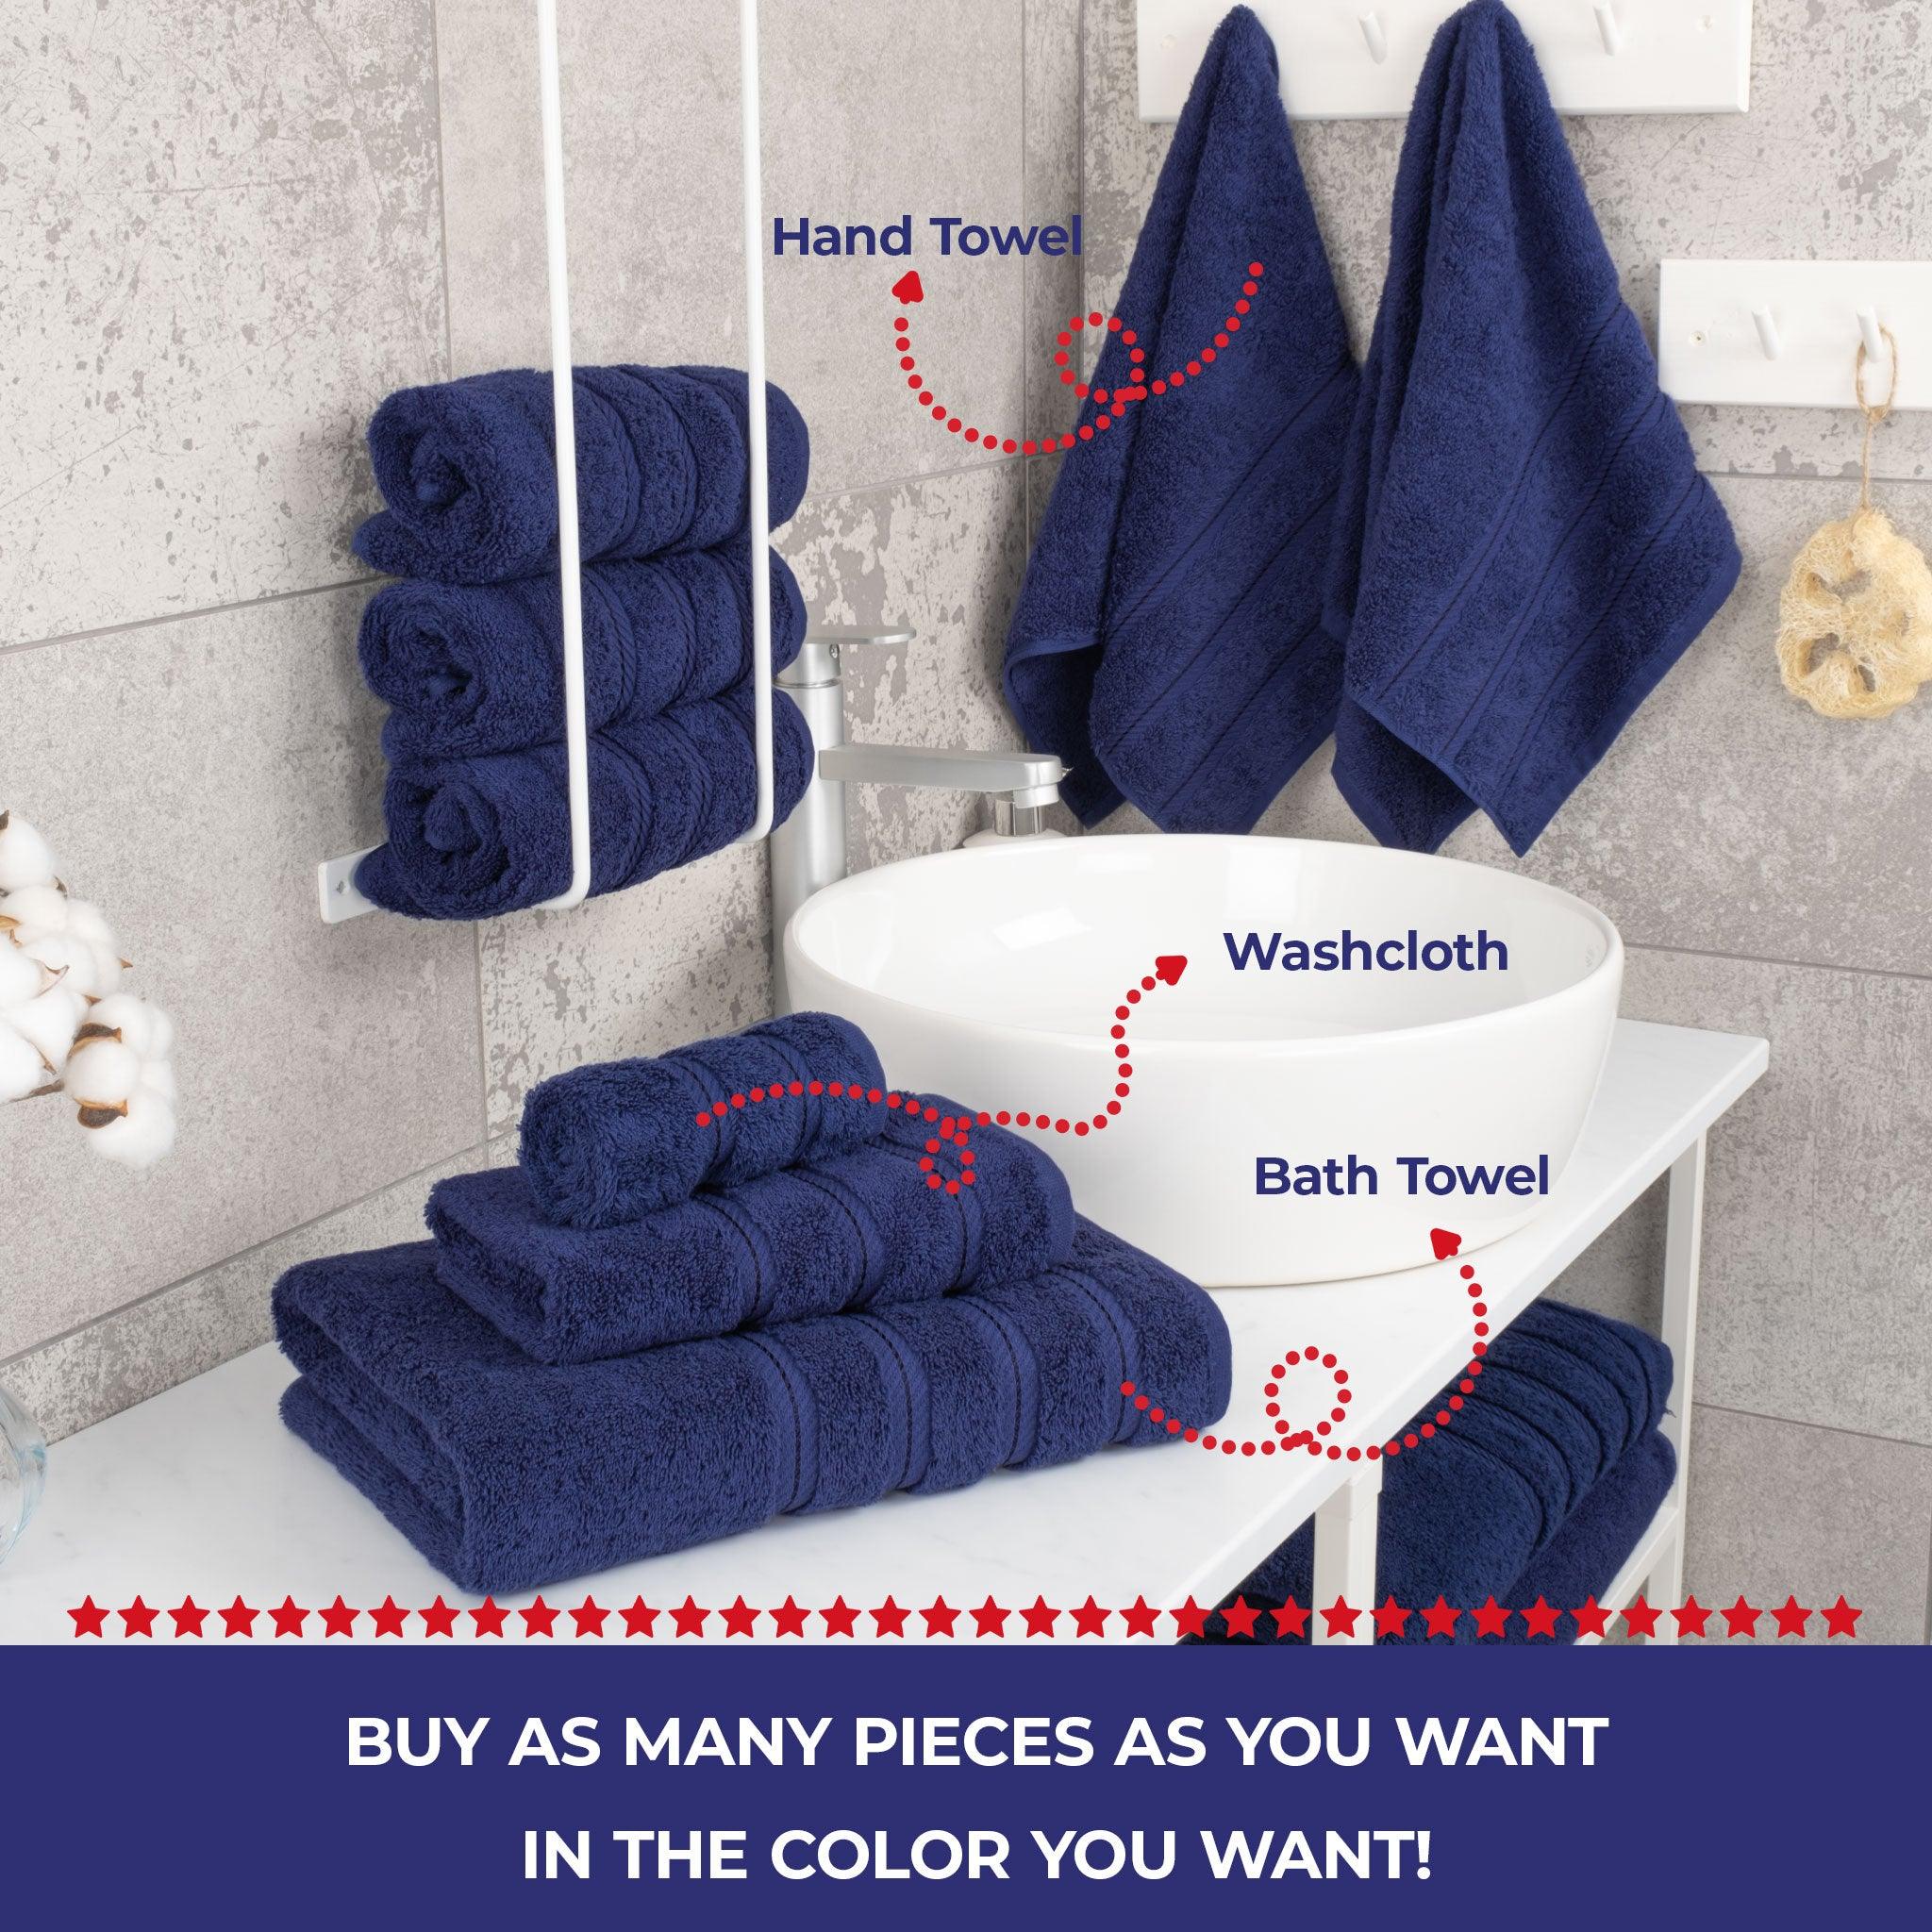 American Soft Linen - Single Piece Turkish Cotton Hand Towels - Navy-Blue - 4